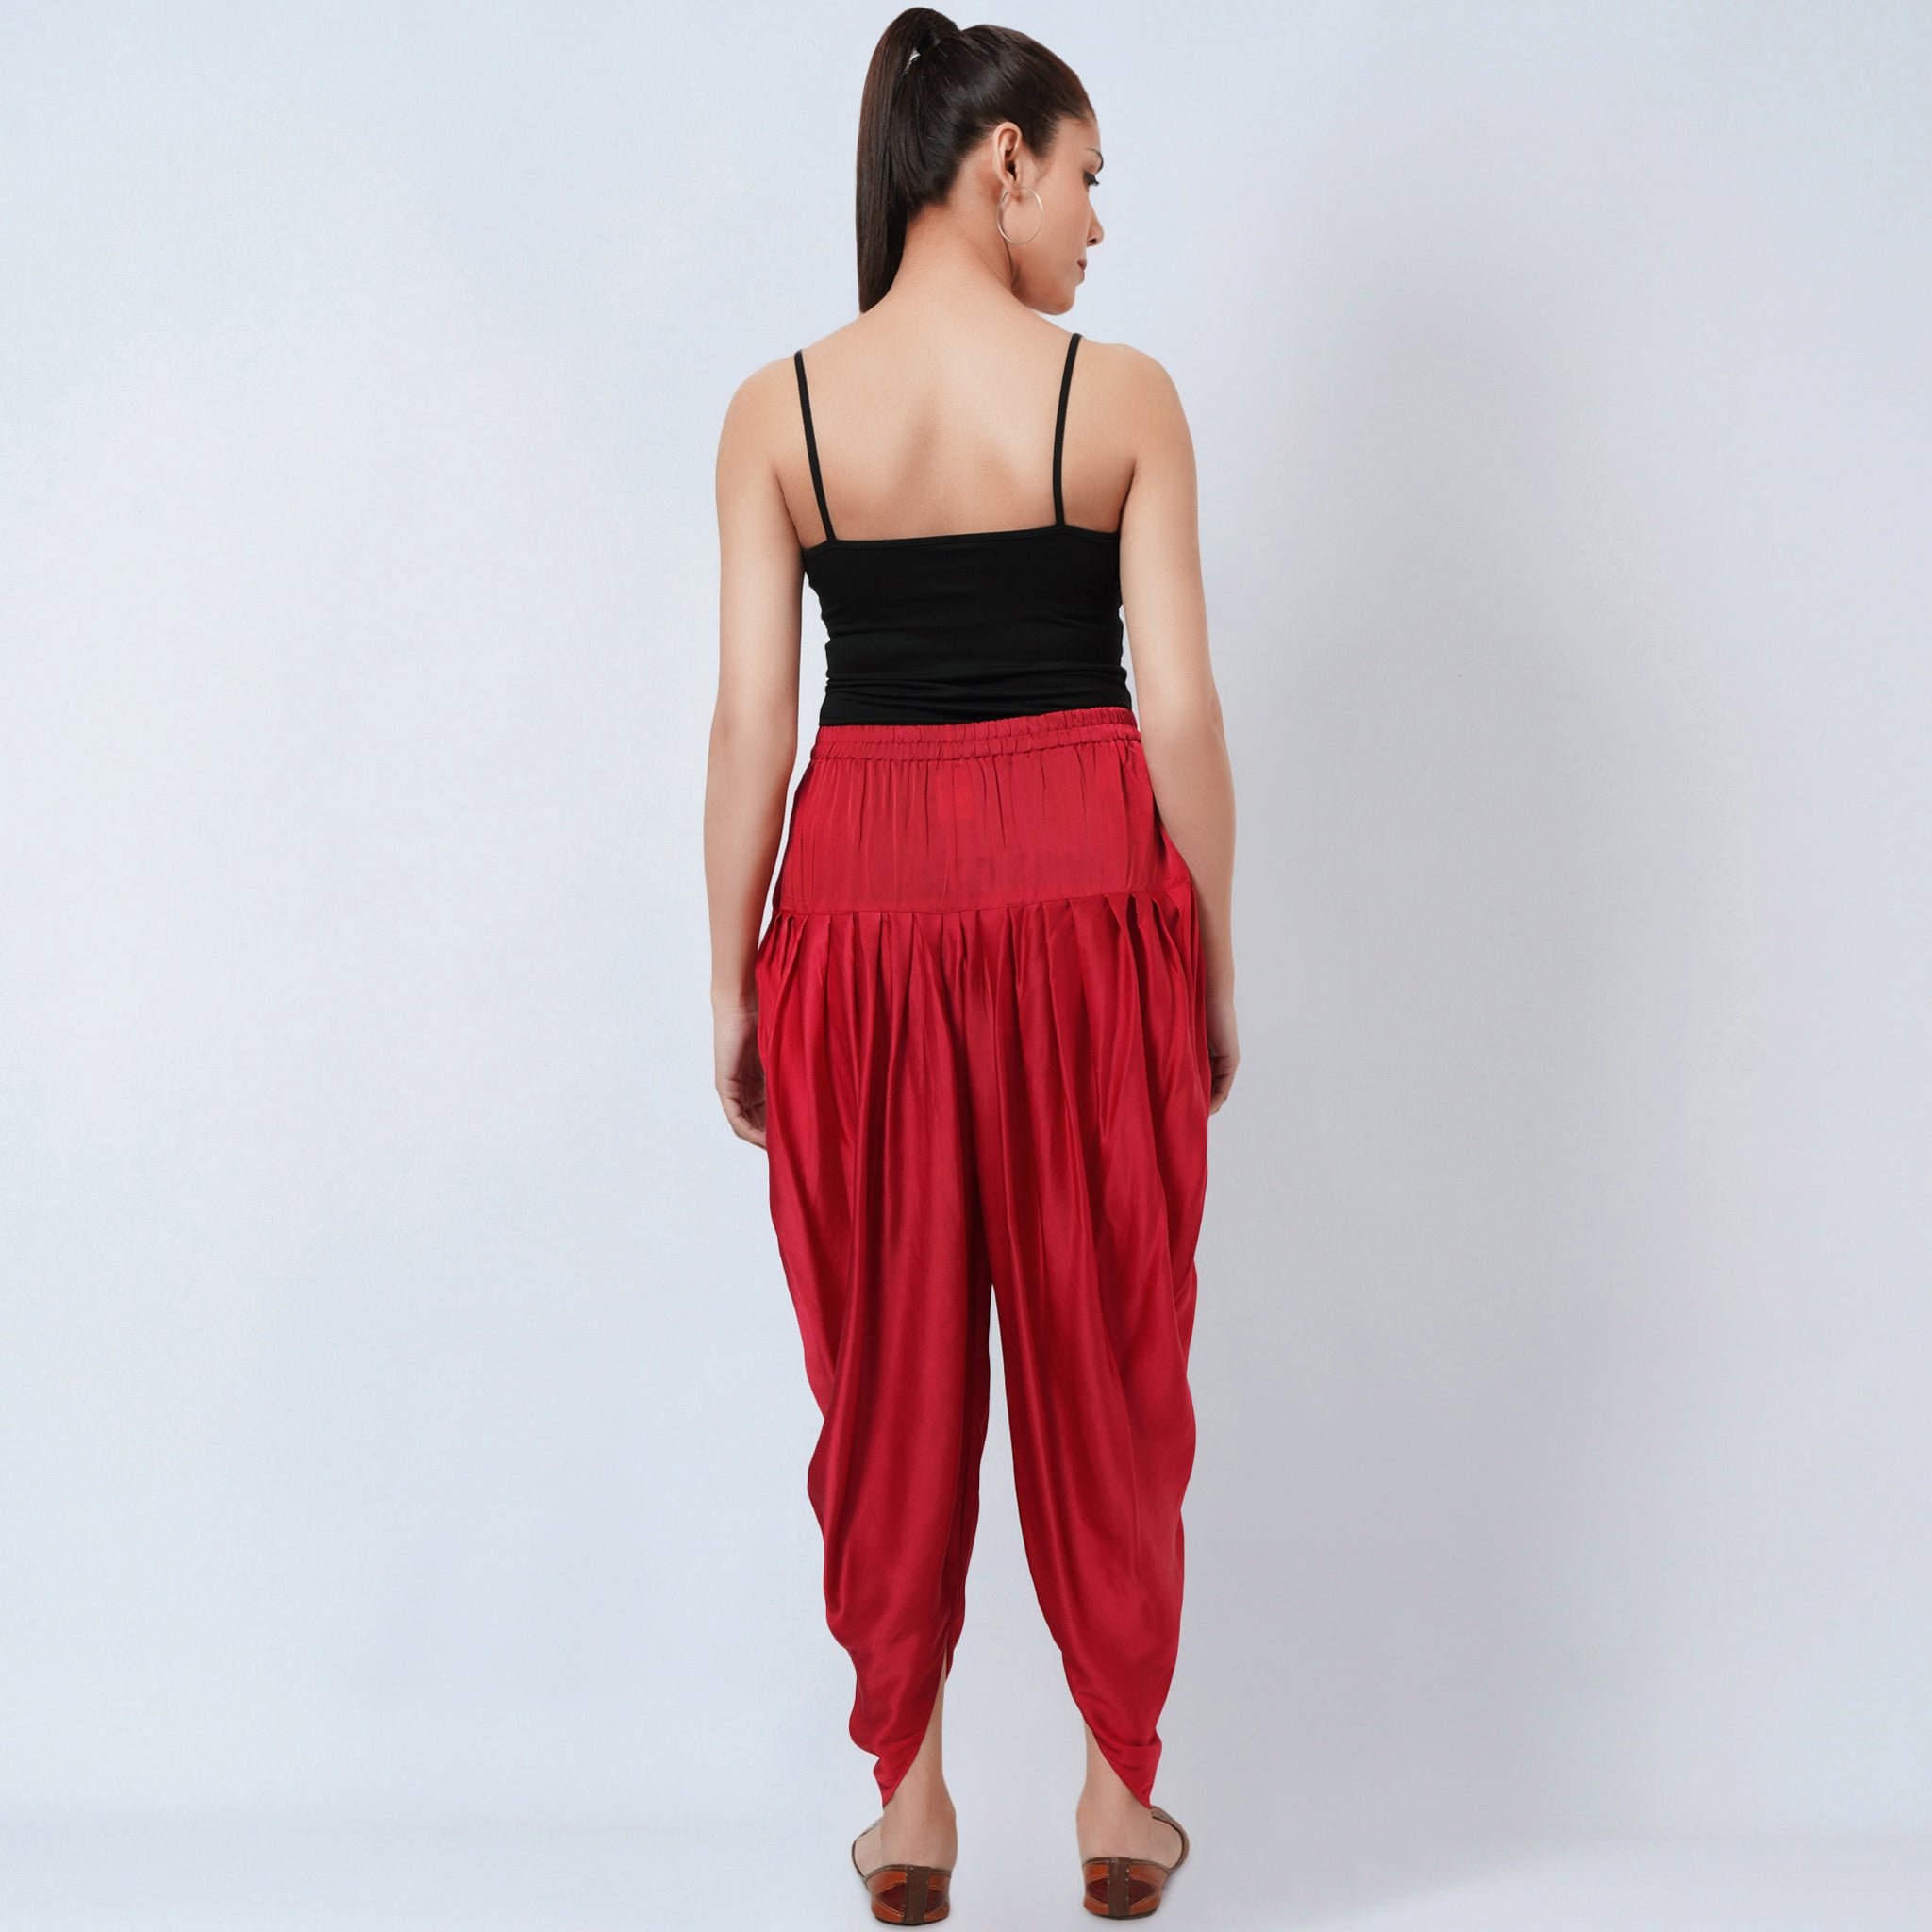 Buy Dhoti Pants for Women Trousers, Elasticated Pants, Tulip Boho Trousers,  Hippie Bohemian Trousers Harem Pants, Dhoti Indian Dhoti Pants Online in  India - Etsy